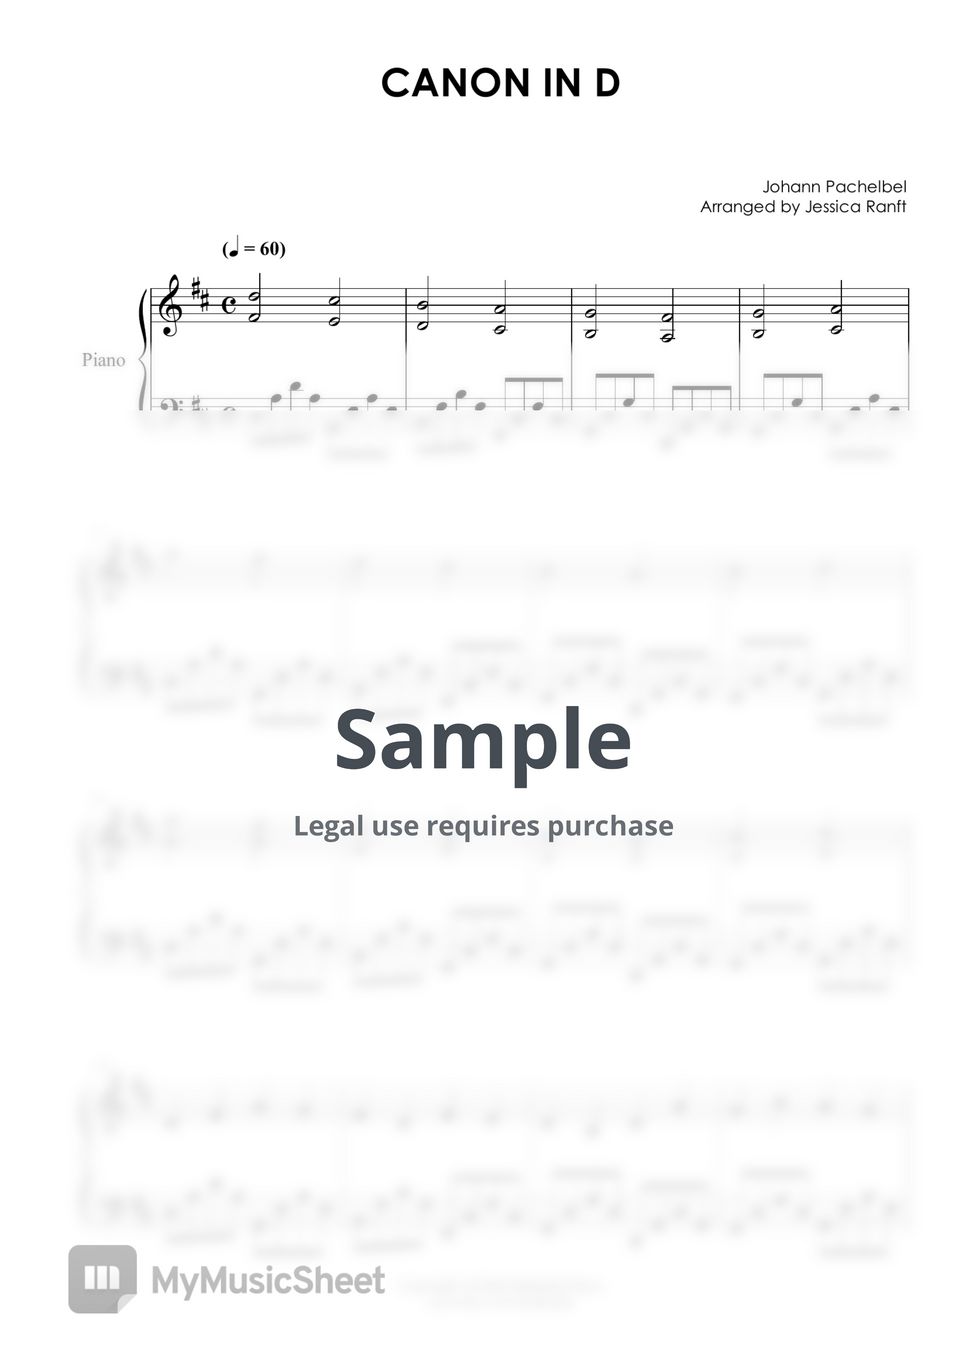 Pachelbel - Canon in D Major by Balladial Piano